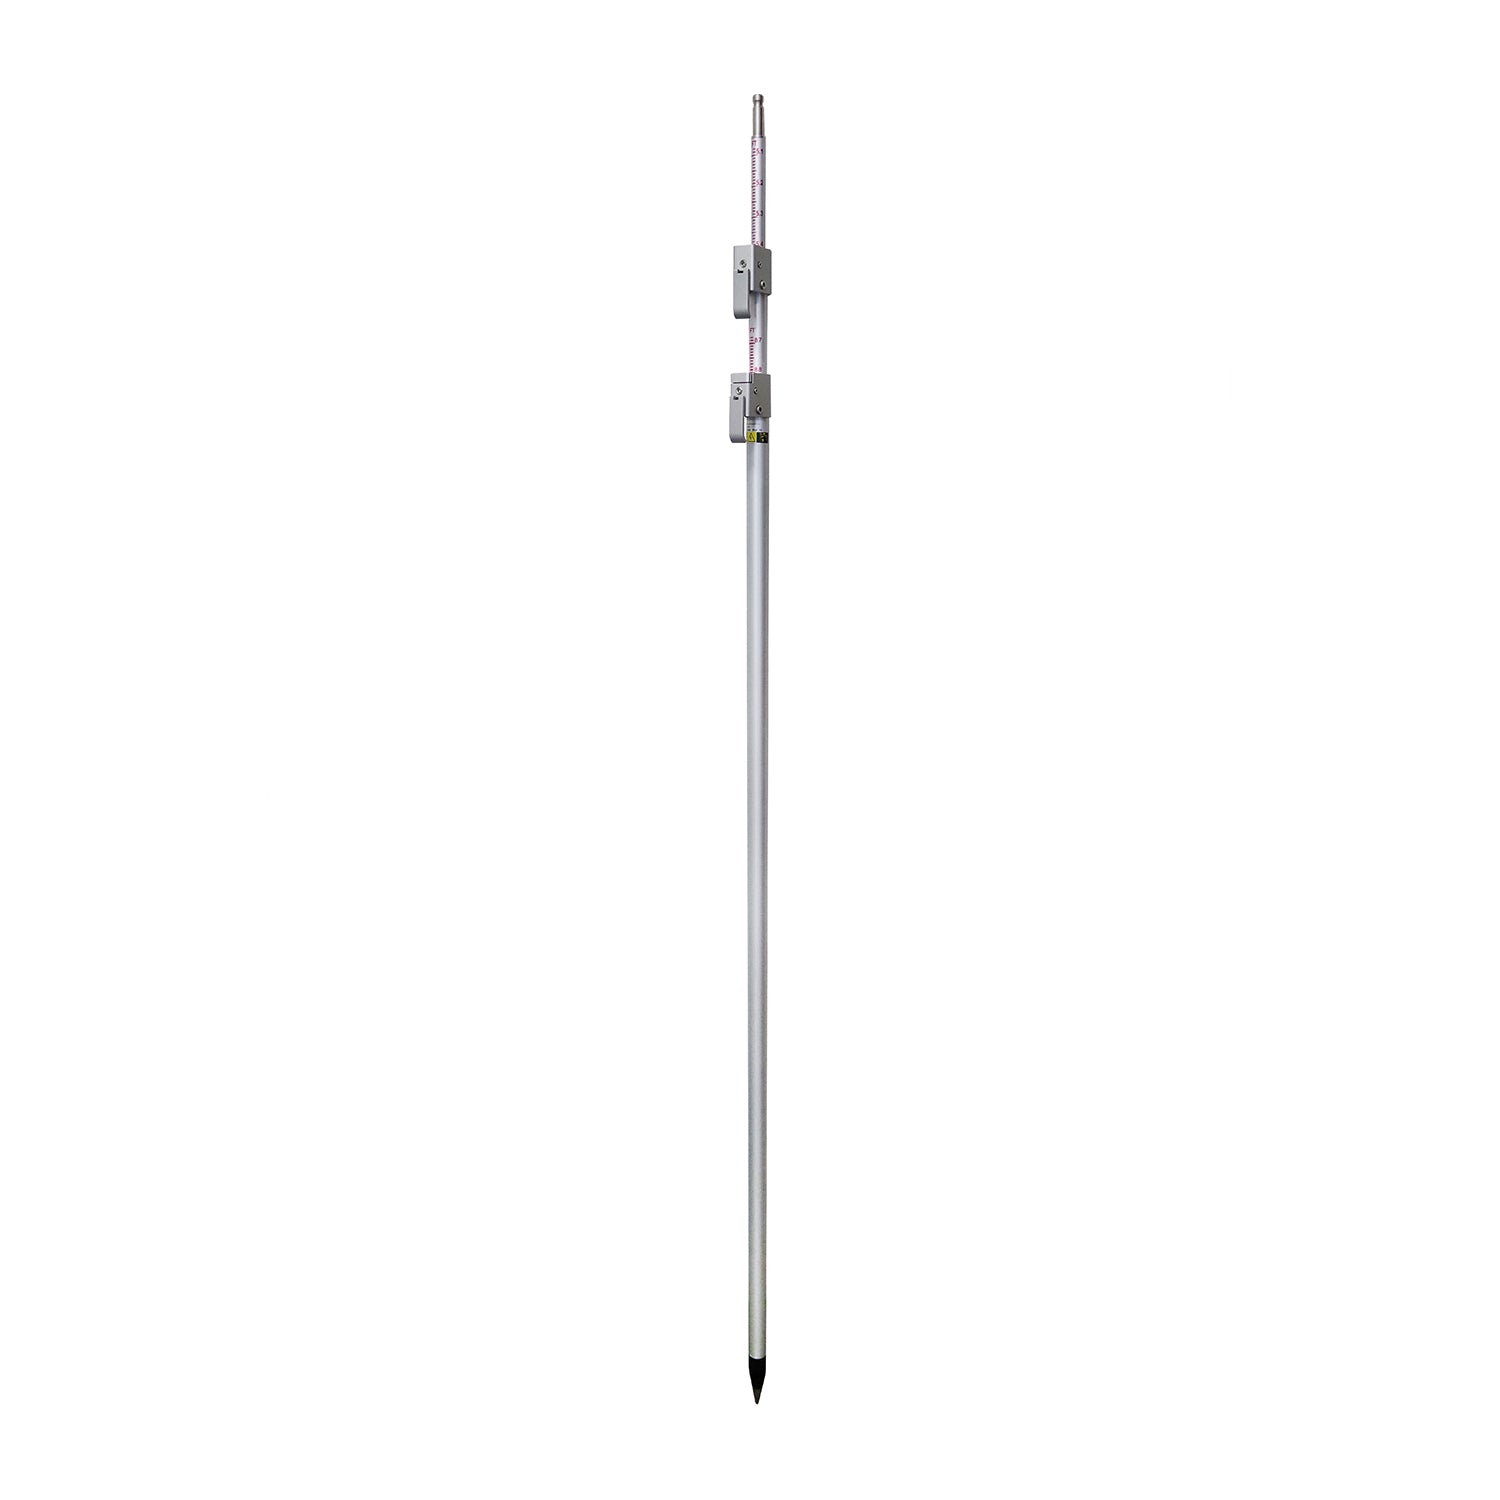 Useful & Complete small telescopic pole Supplies 